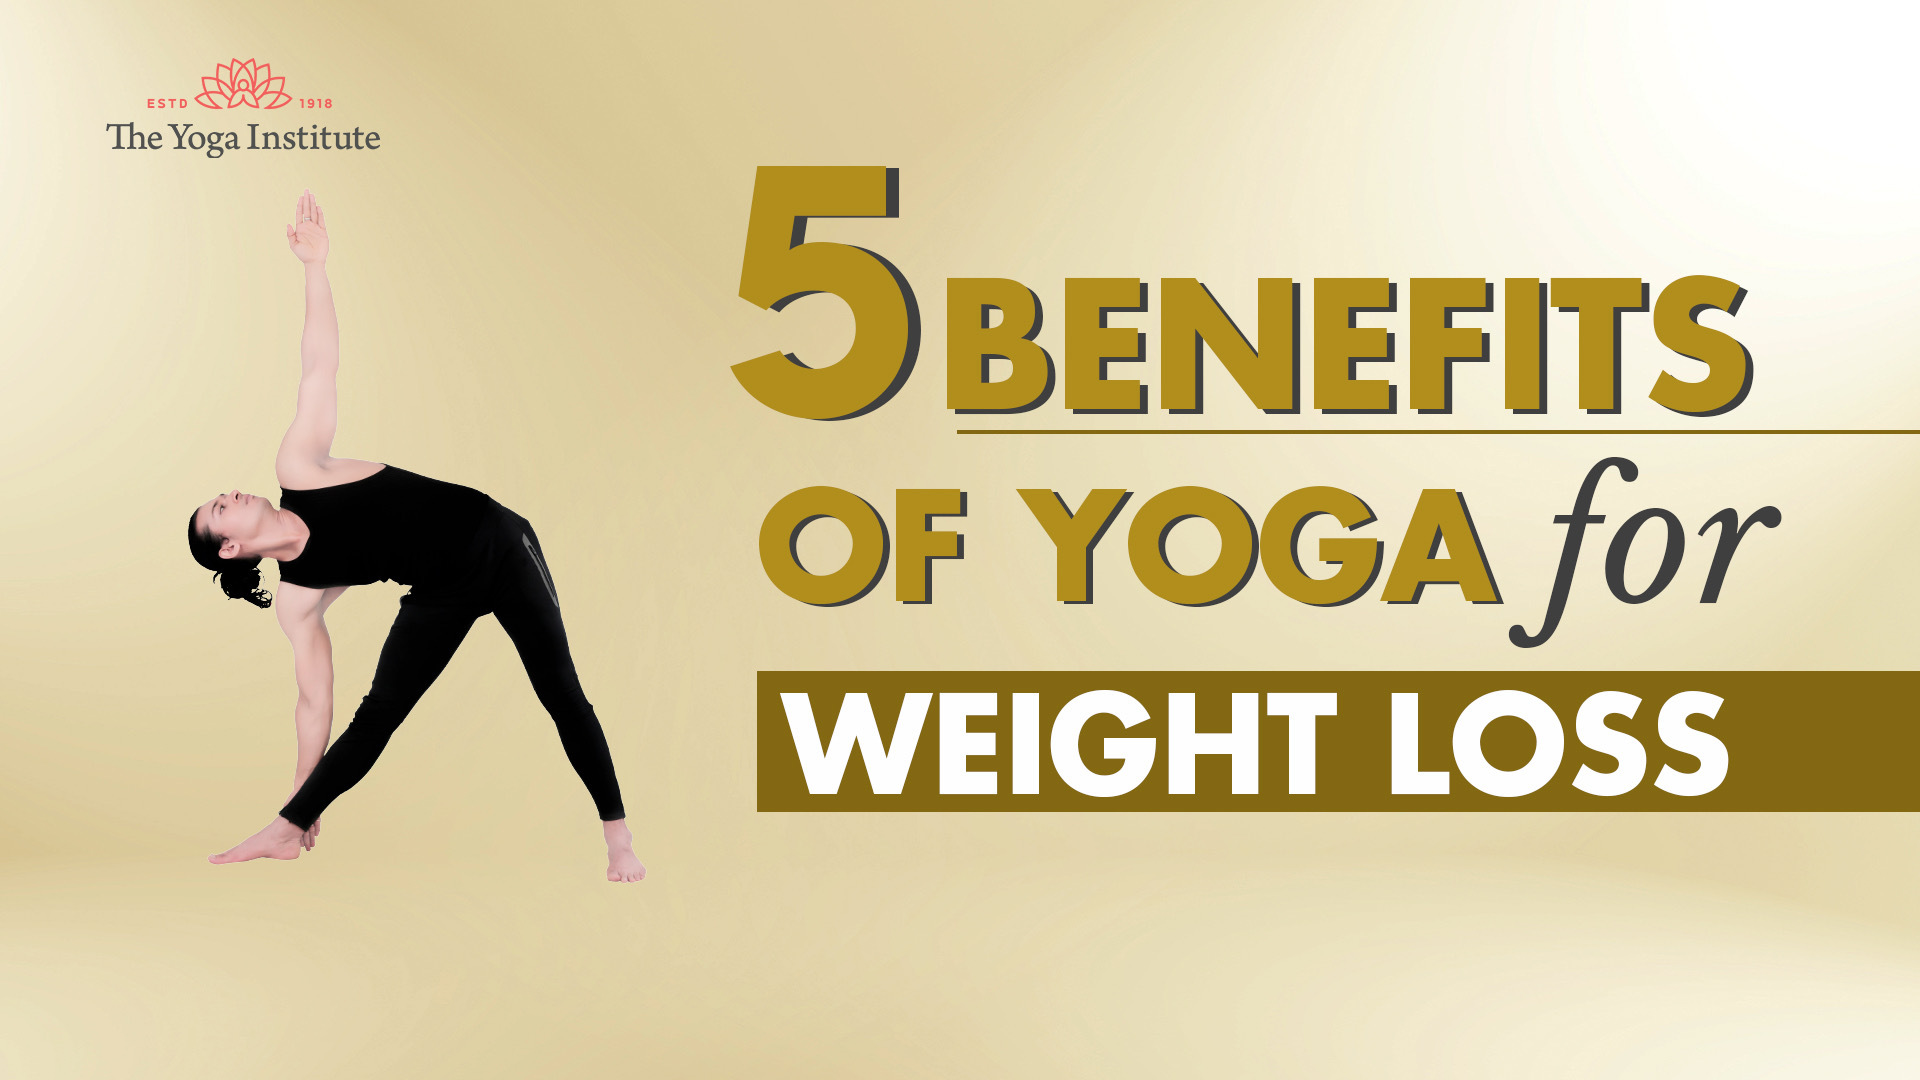 5-benefits-of-yoga-for-weight-loss -copyac0fb114-3b91-4acd-a5df-8645cc854634.jpg